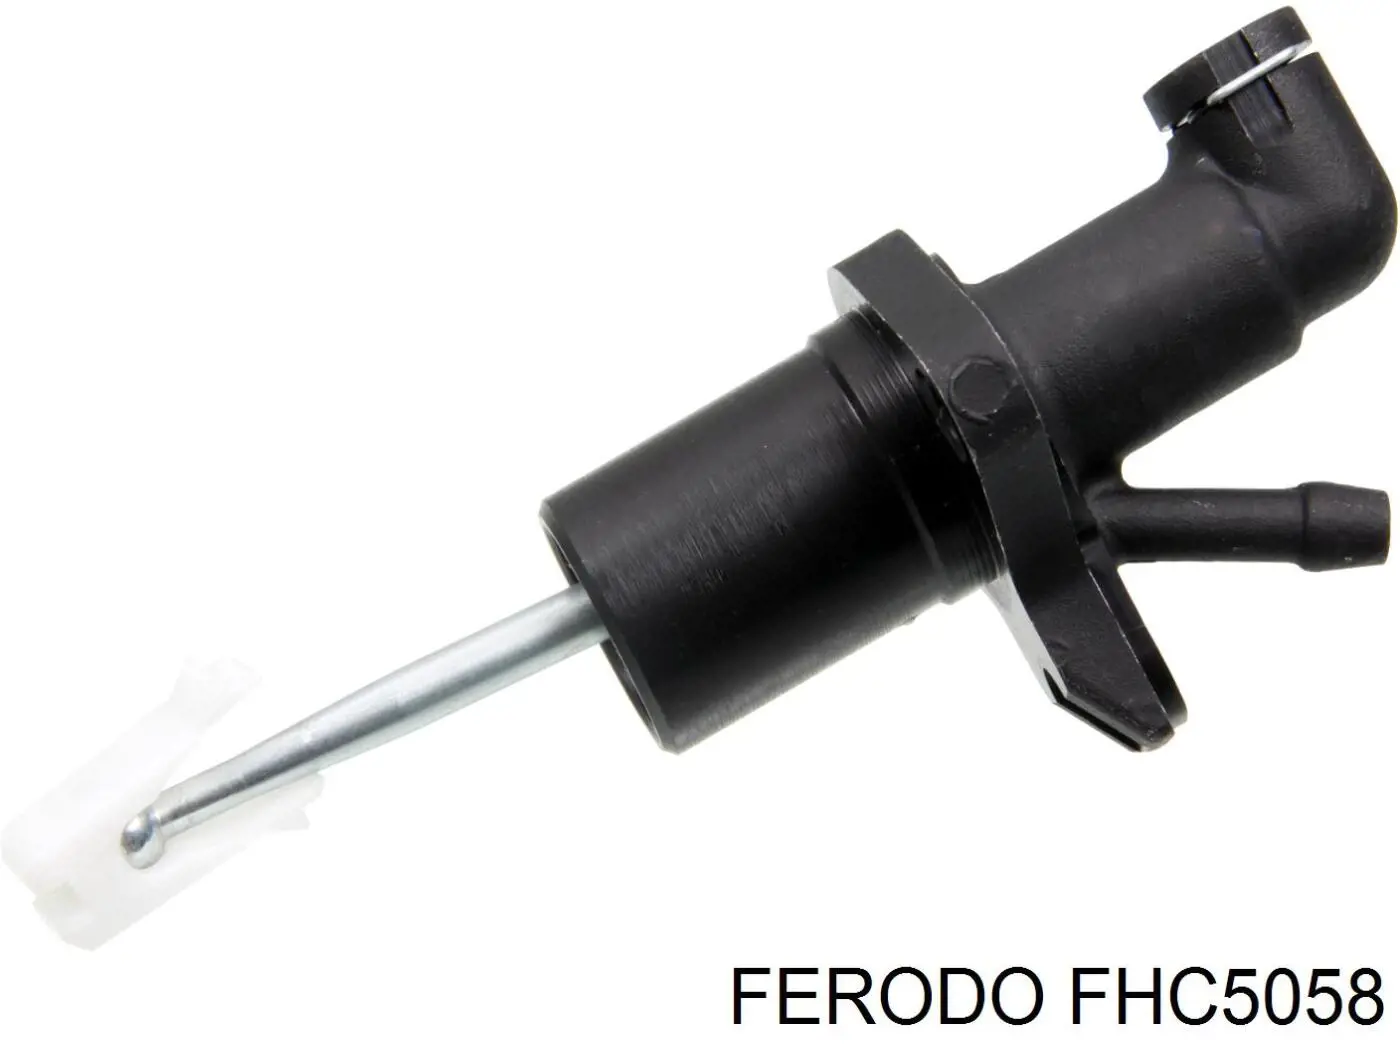 FHC5058 Ferodo cilindro maestro de embrague